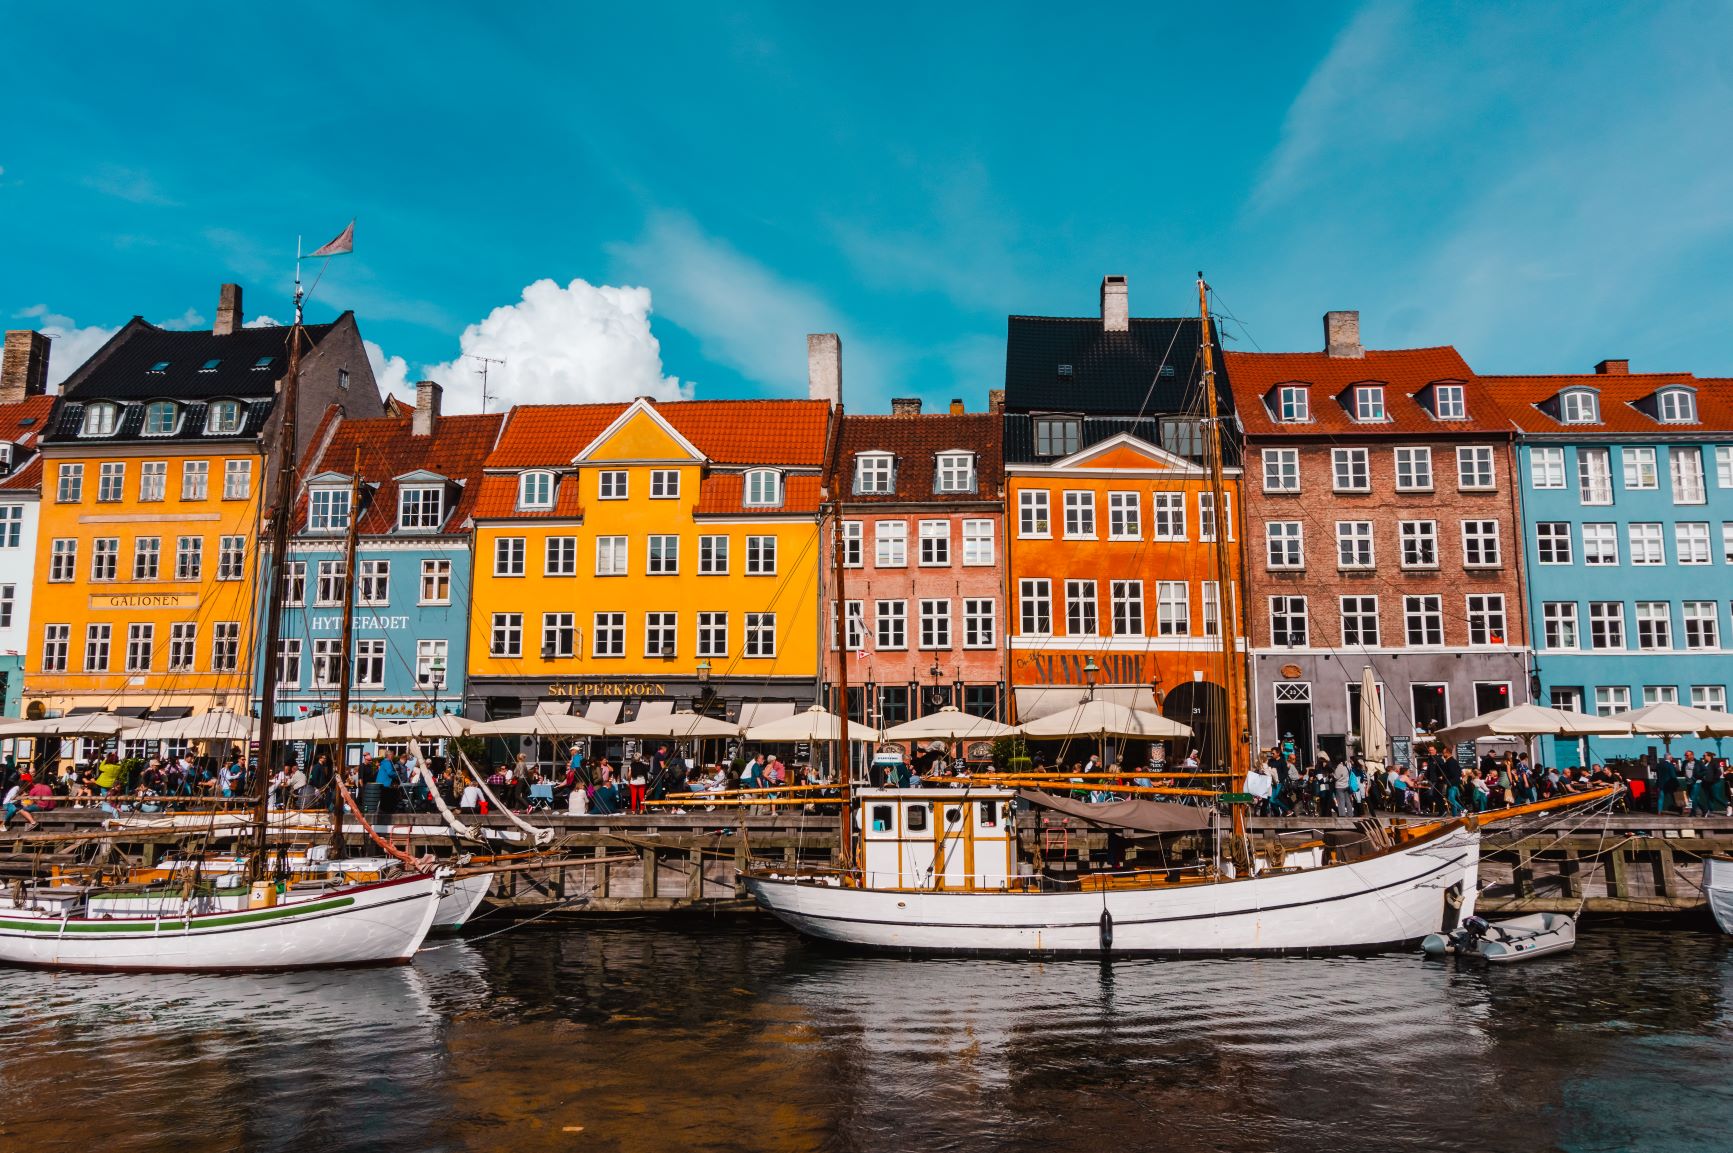 The colourful waterfront buildings of Nyhavn in Copenhagen.